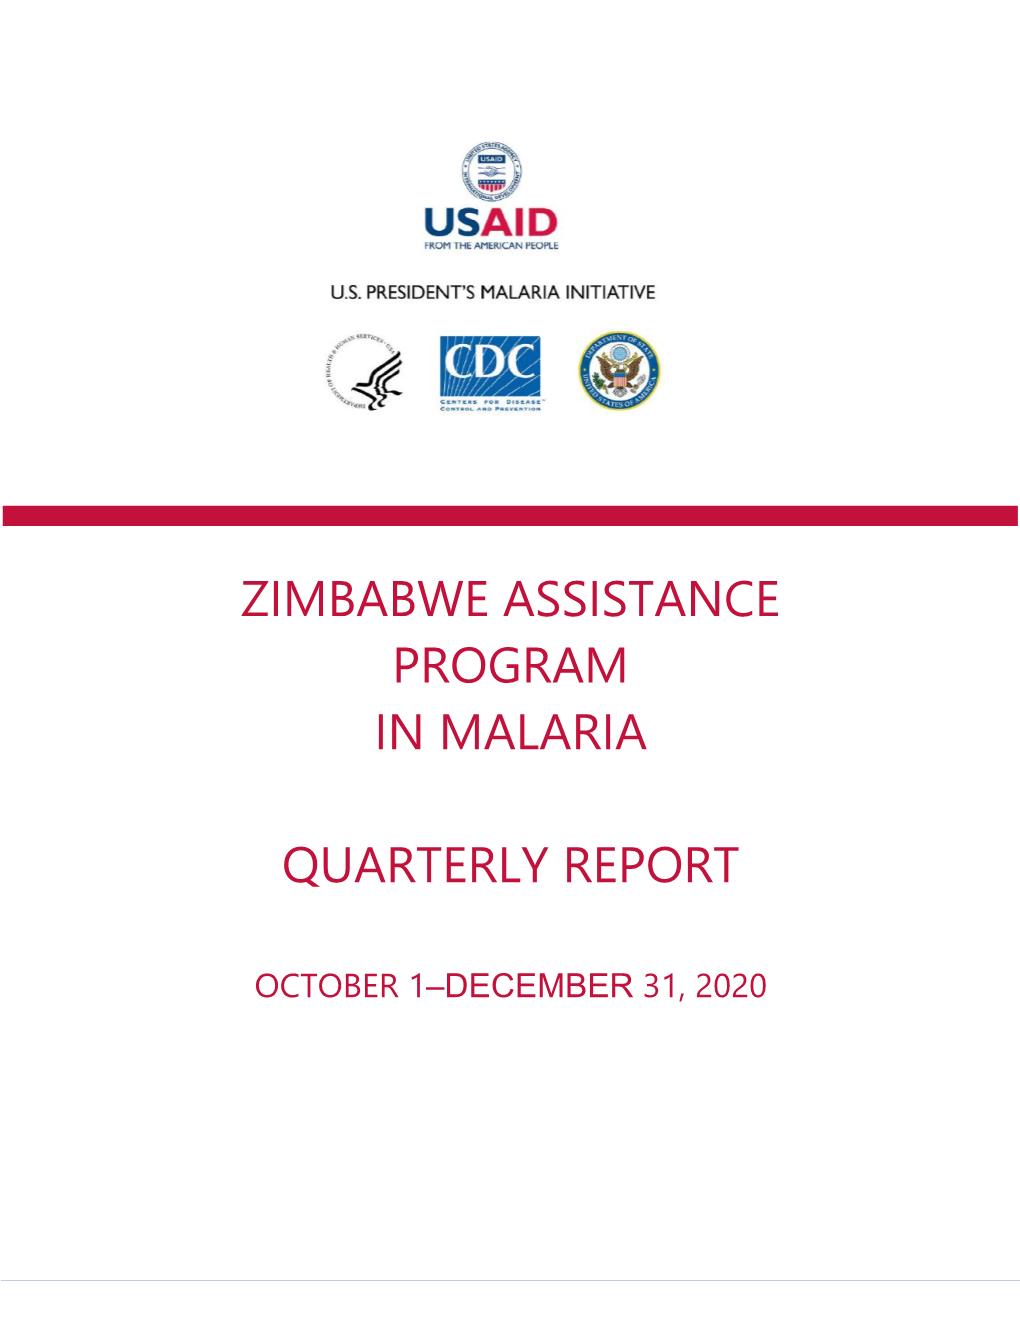 Zimbabwe Assistance Program in Malaria Quarterly Report